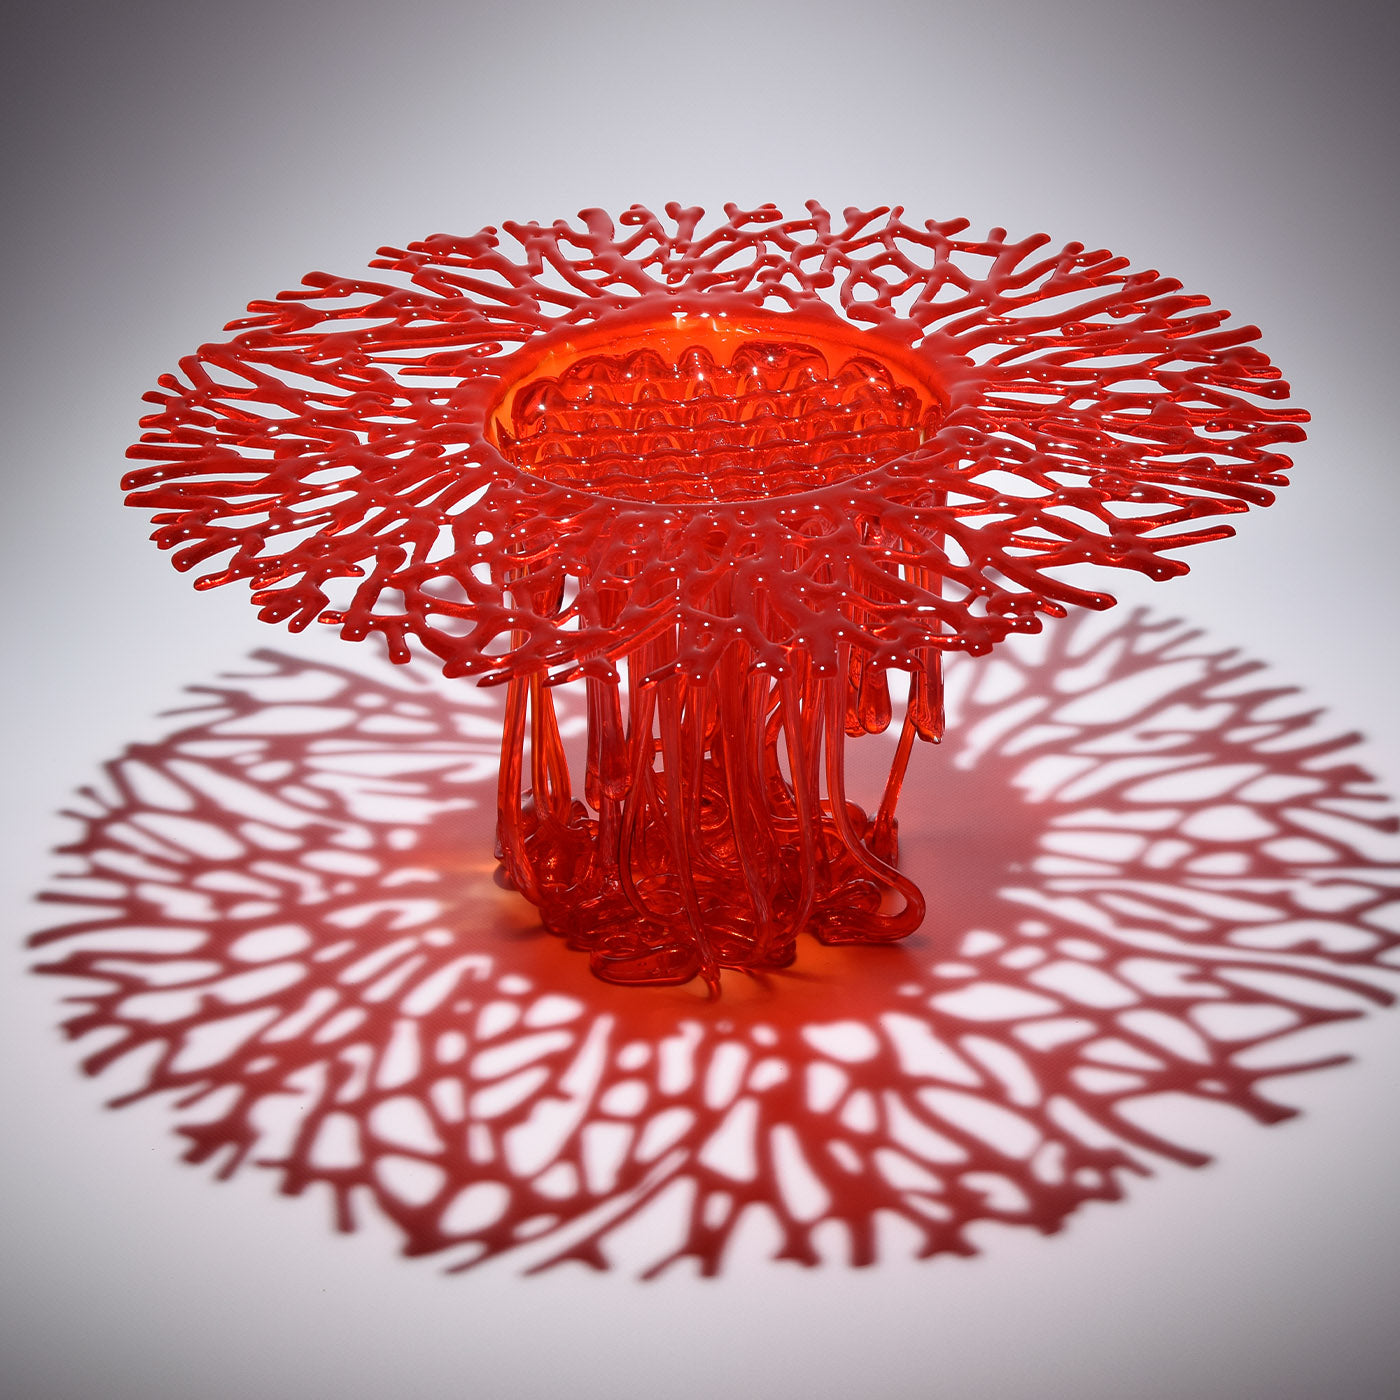 Red Coral Murano Glass Sculptural Centerpiece - Alternative view 1